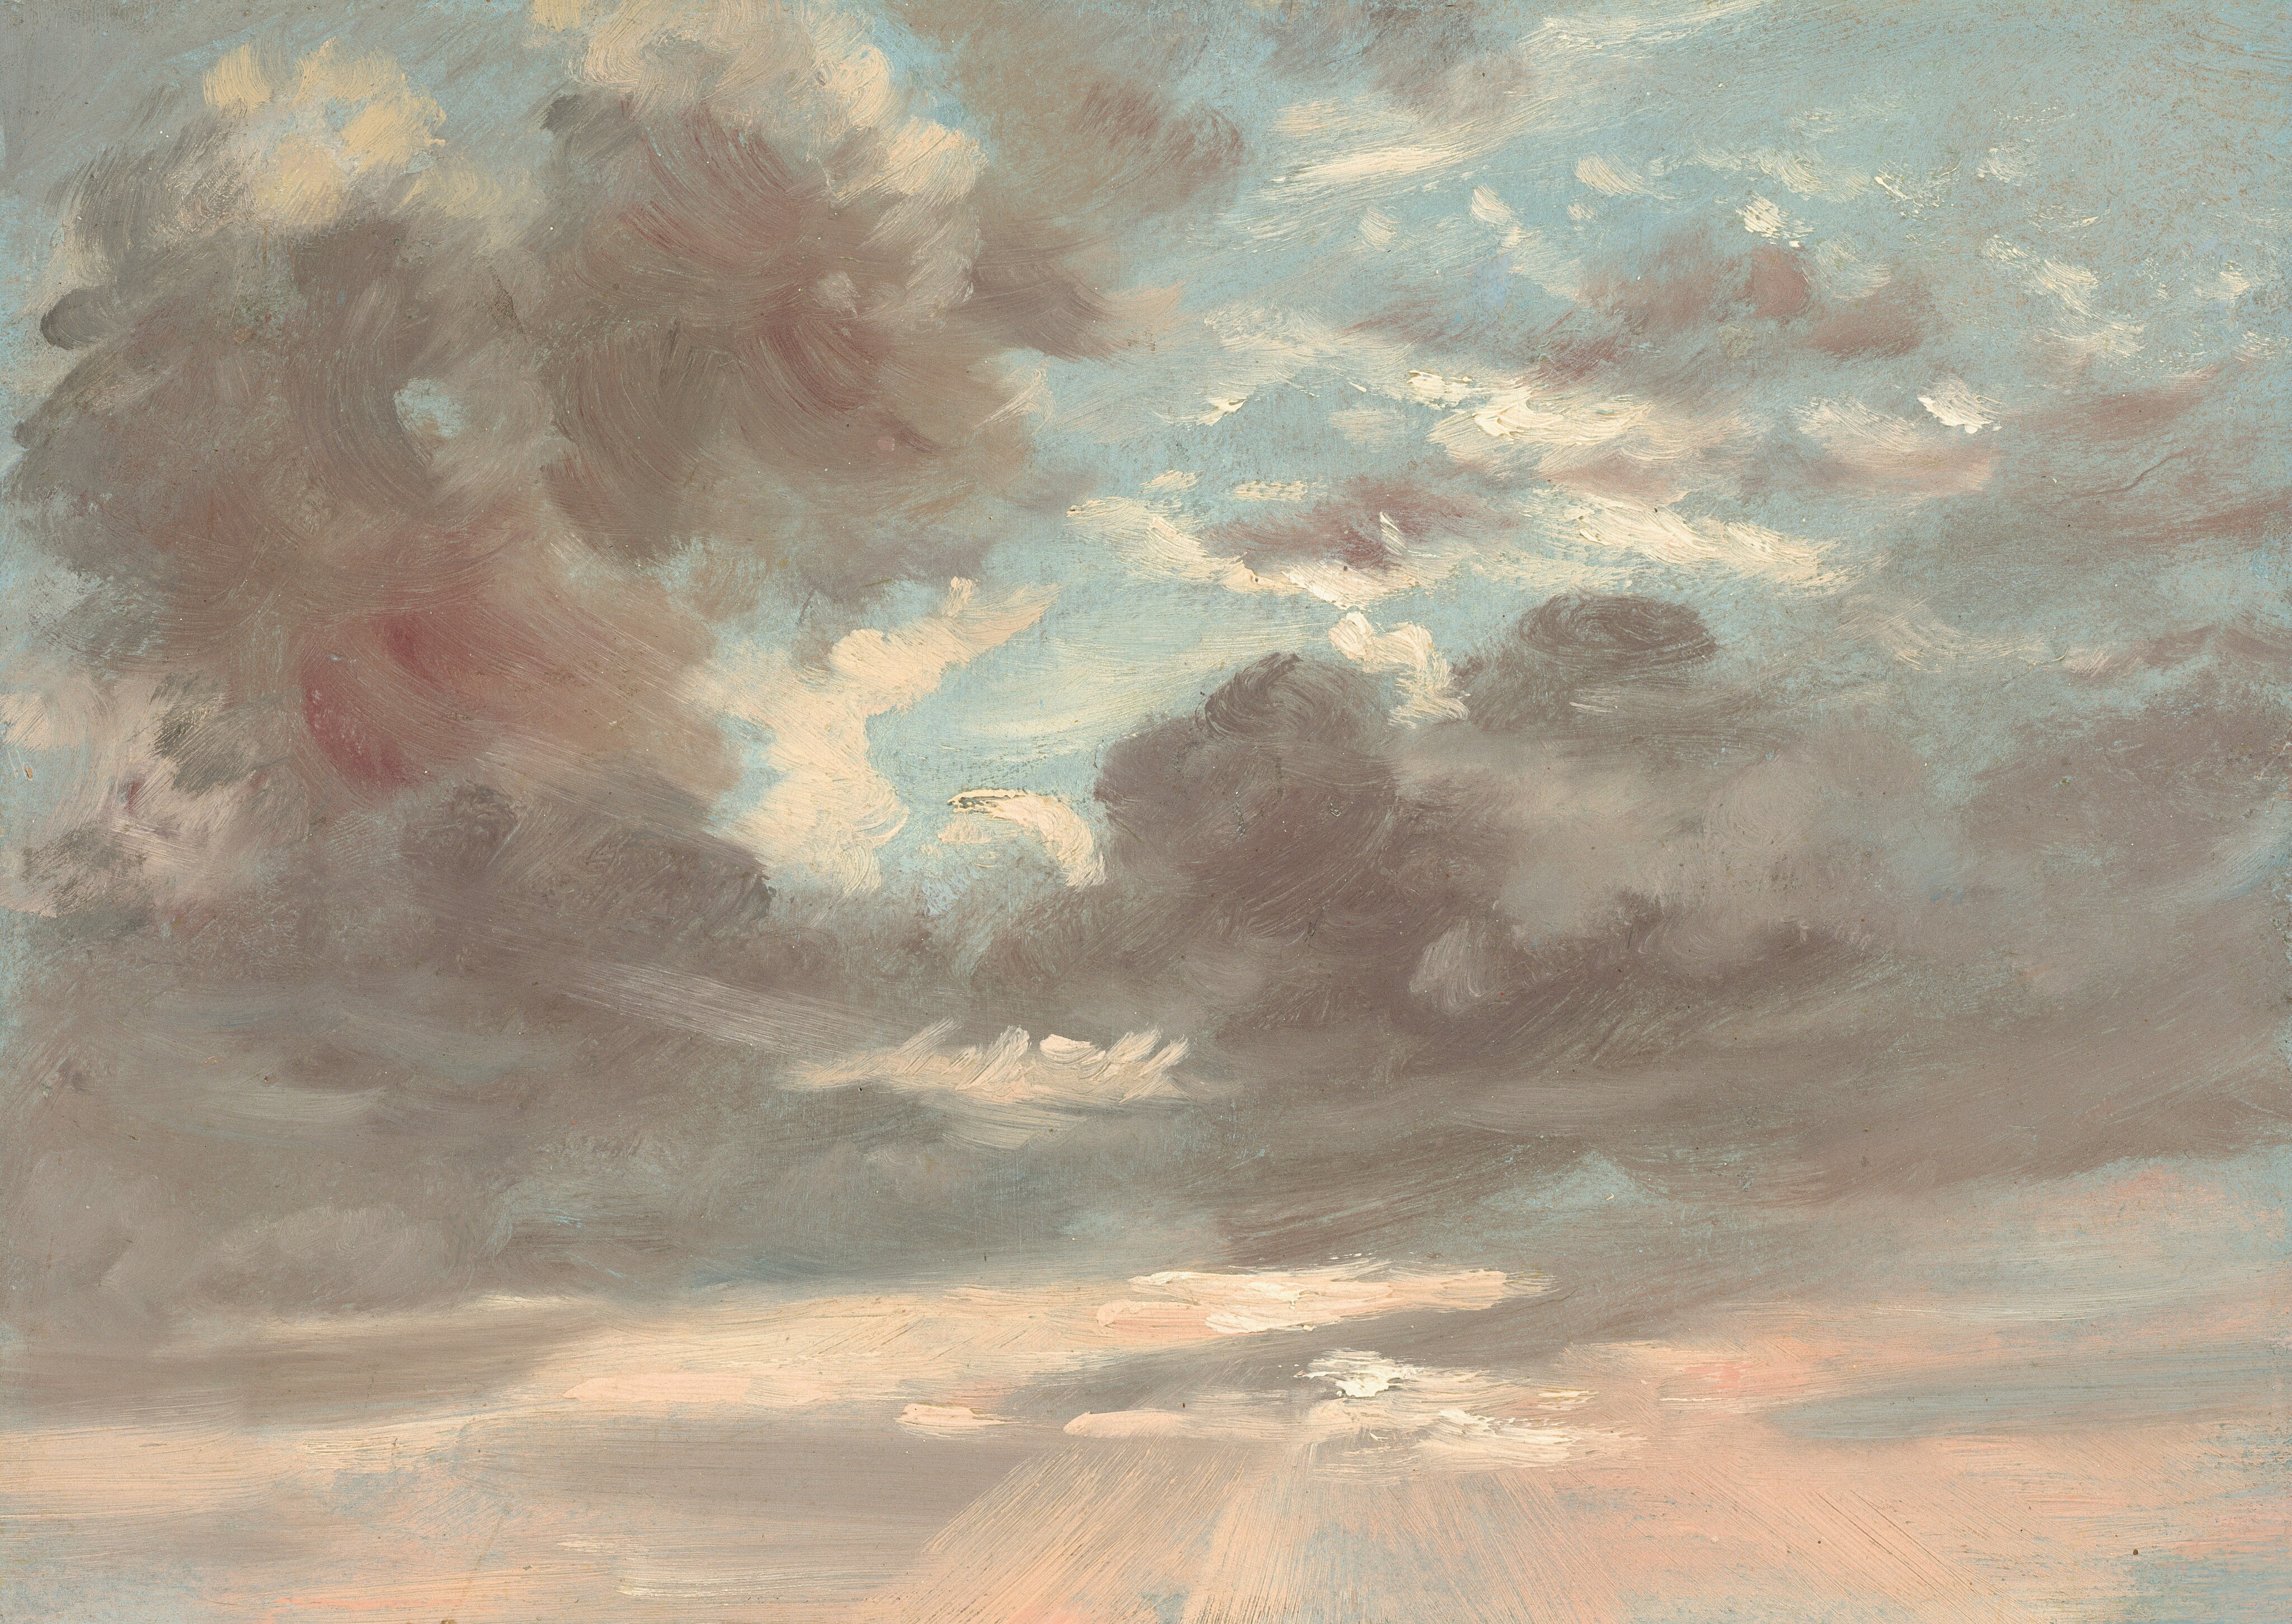 Cloud Study: Stormy Sunset